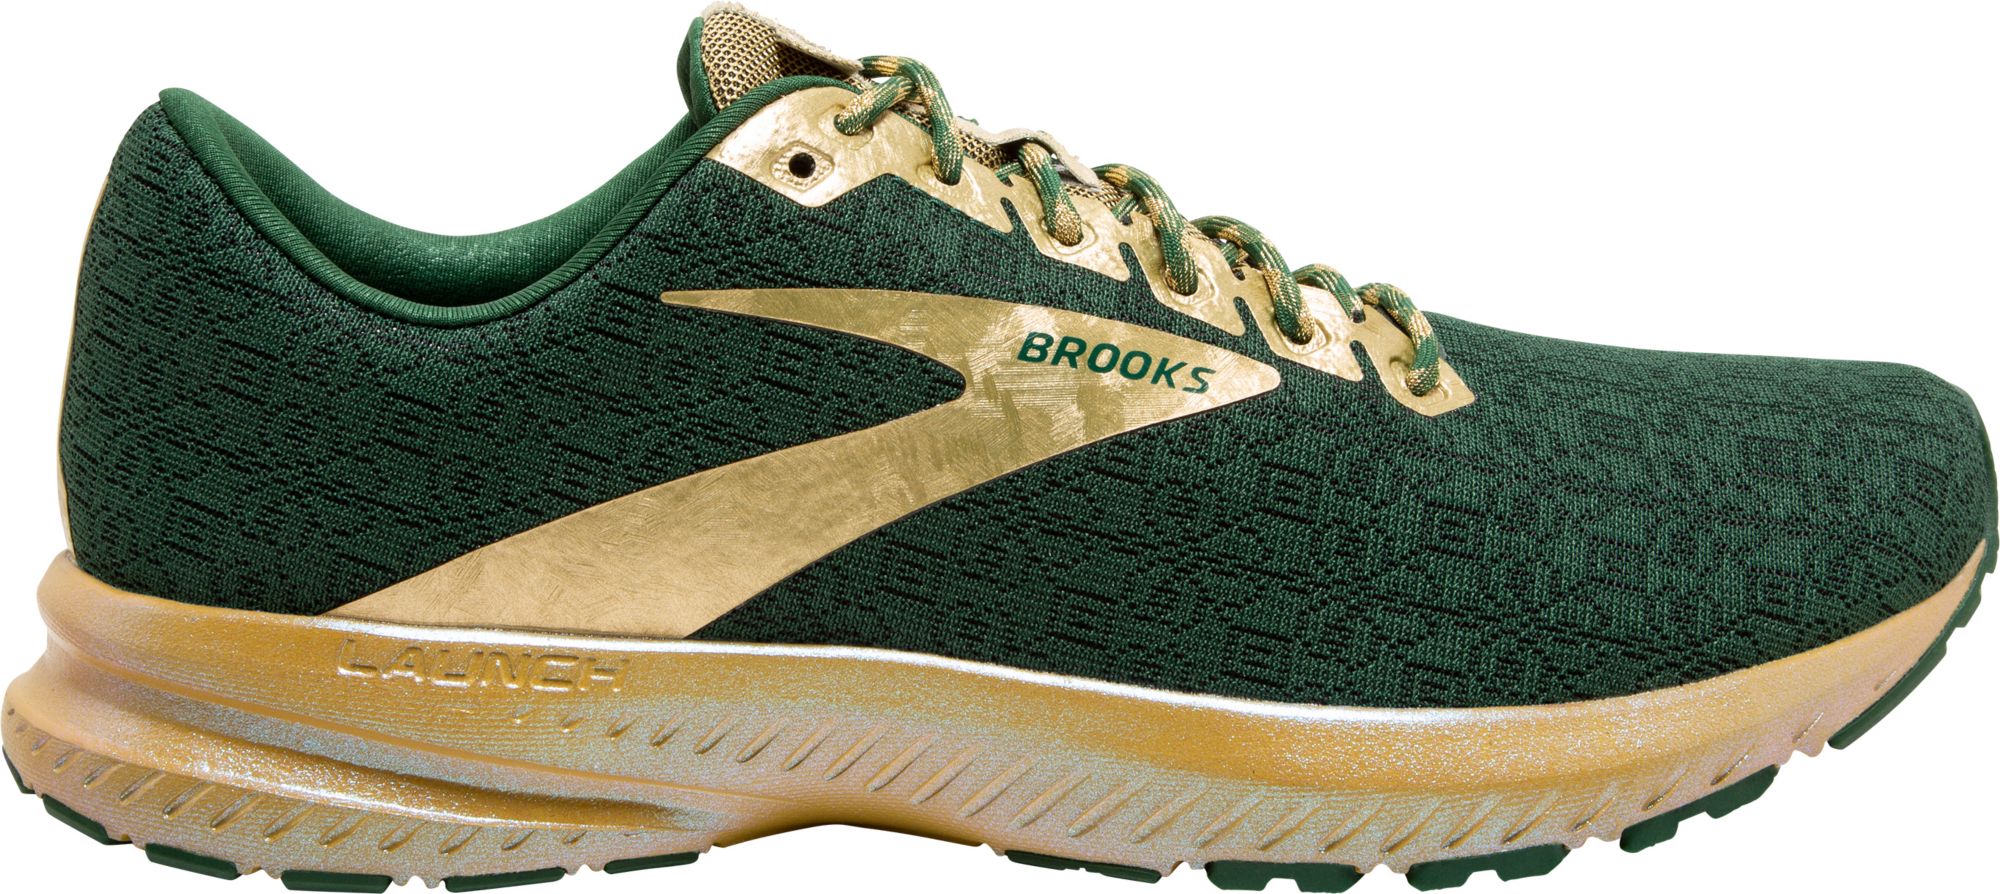 running brooks shoes